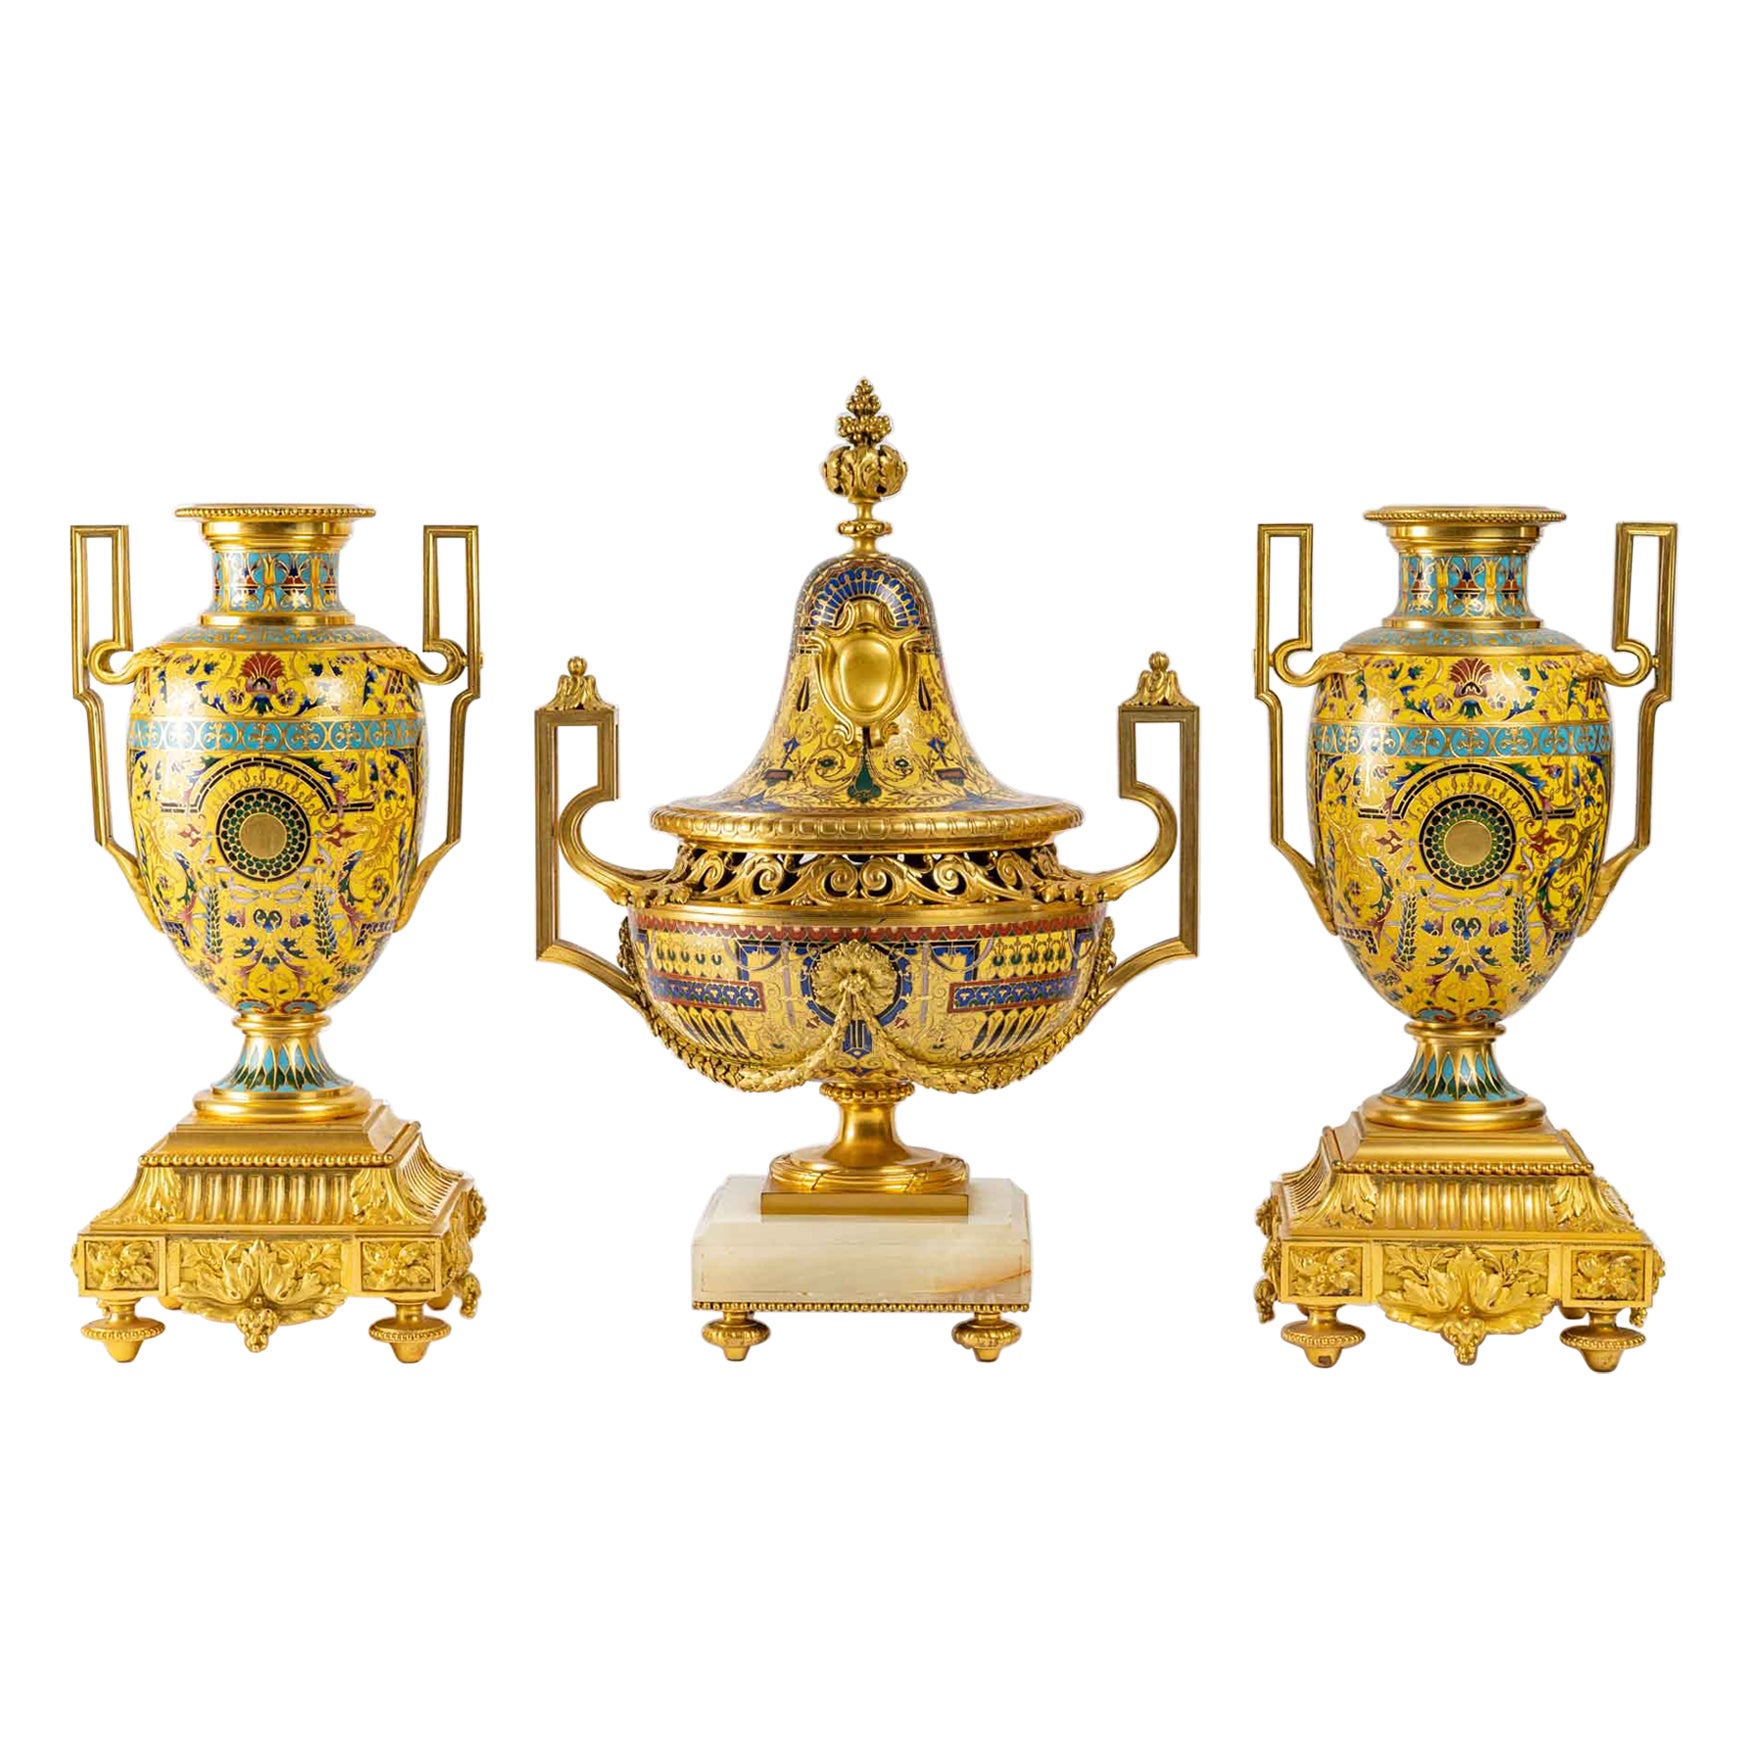 Set of Vases with Pompeian Decoration, 19 Century